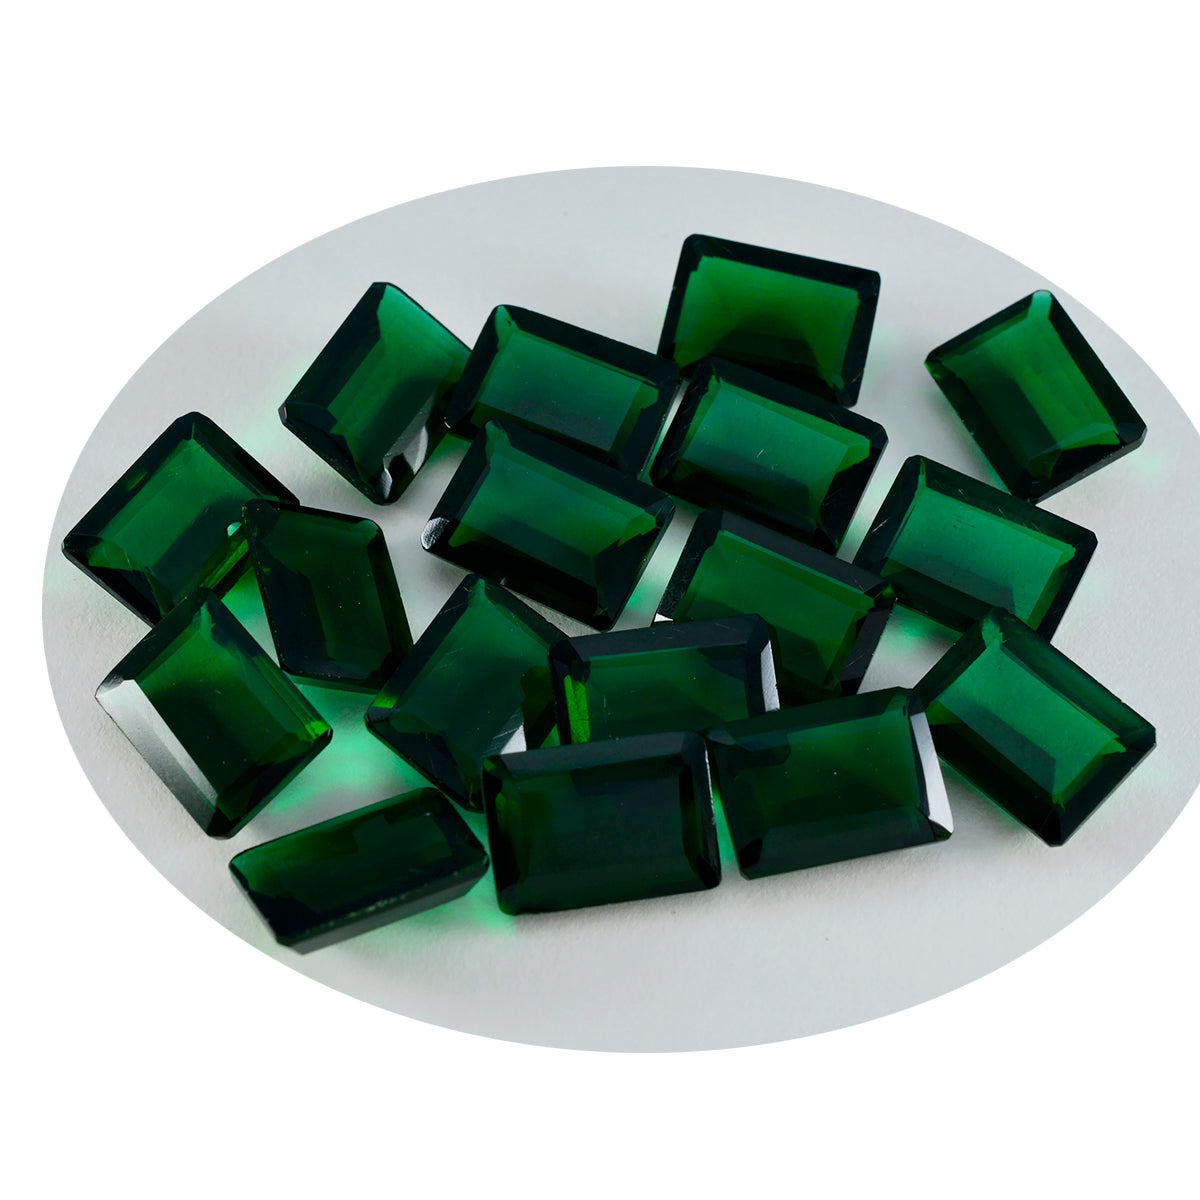 riyogems 1 st grön smaragd cz fasetterad 7x9 mm oktagonform vacker kvalitetspärla